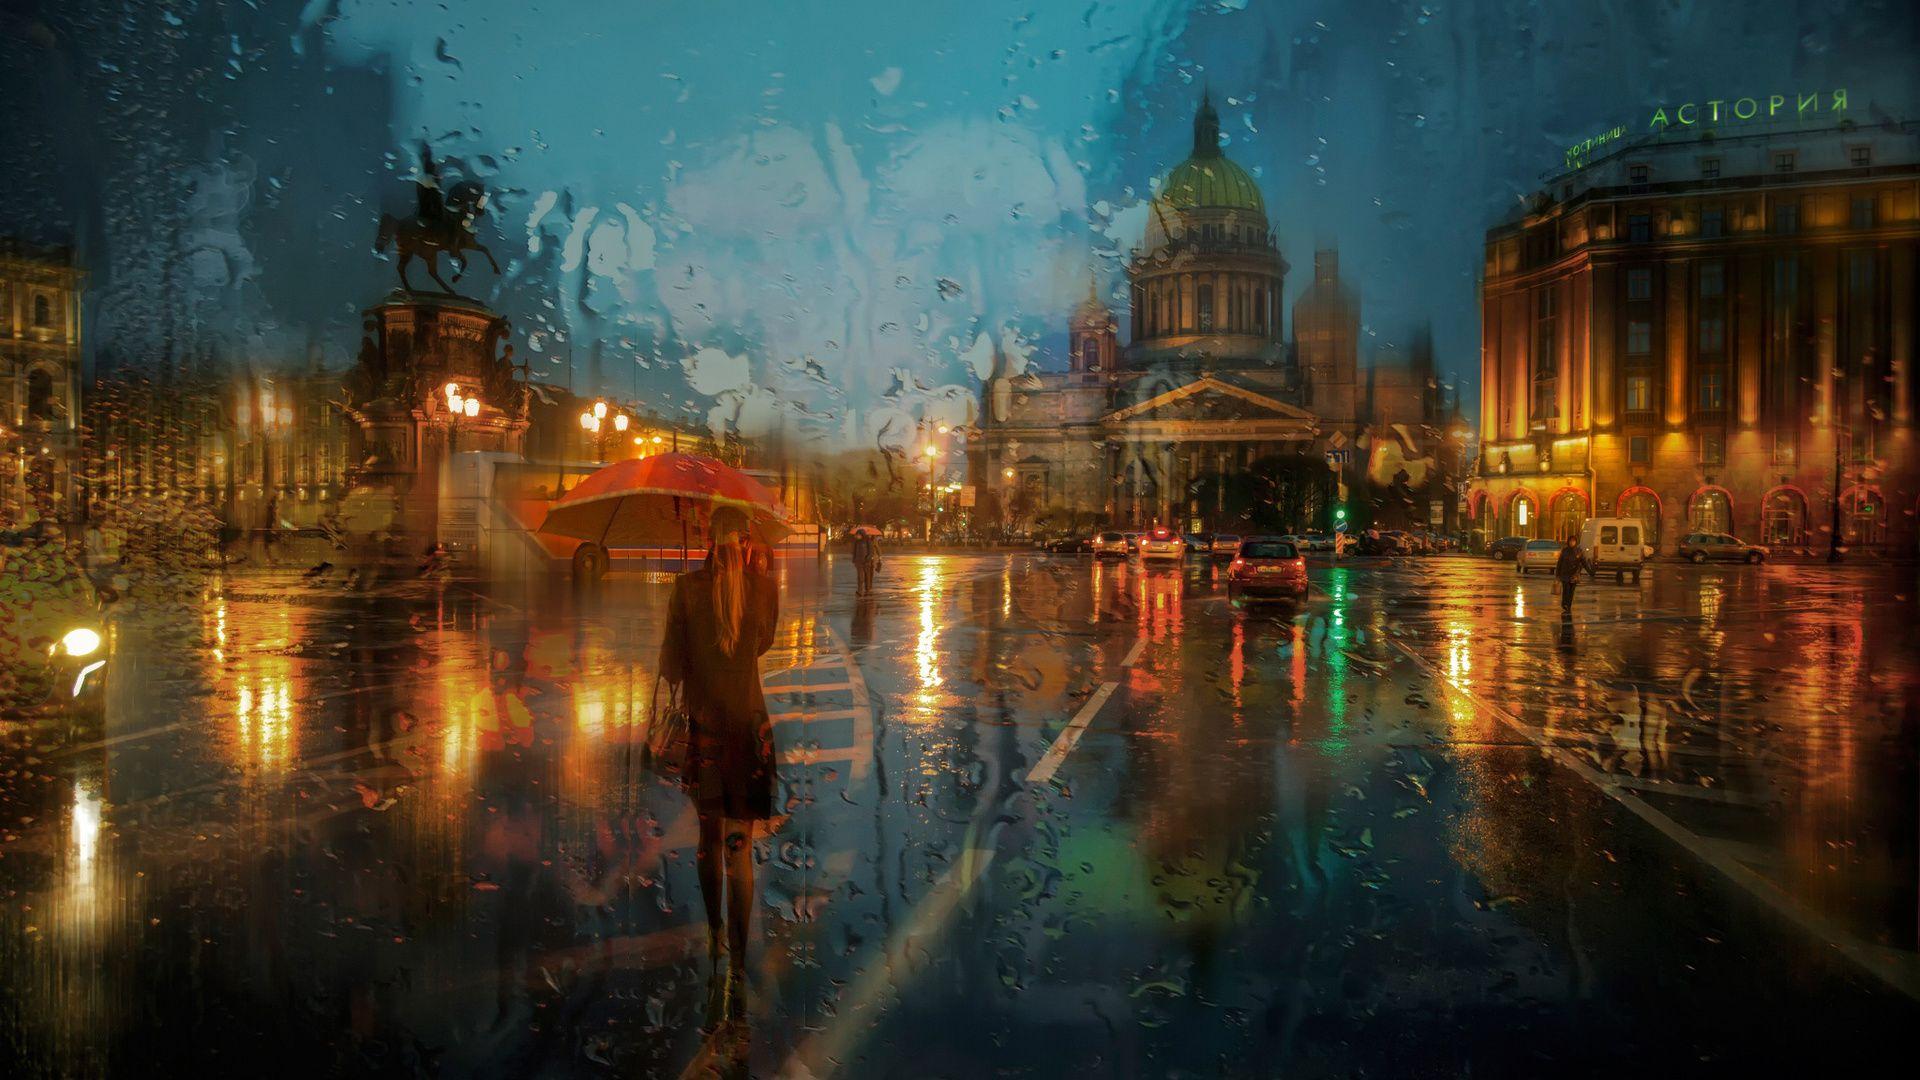 St Petersburg In Rainy Season Wallpaper